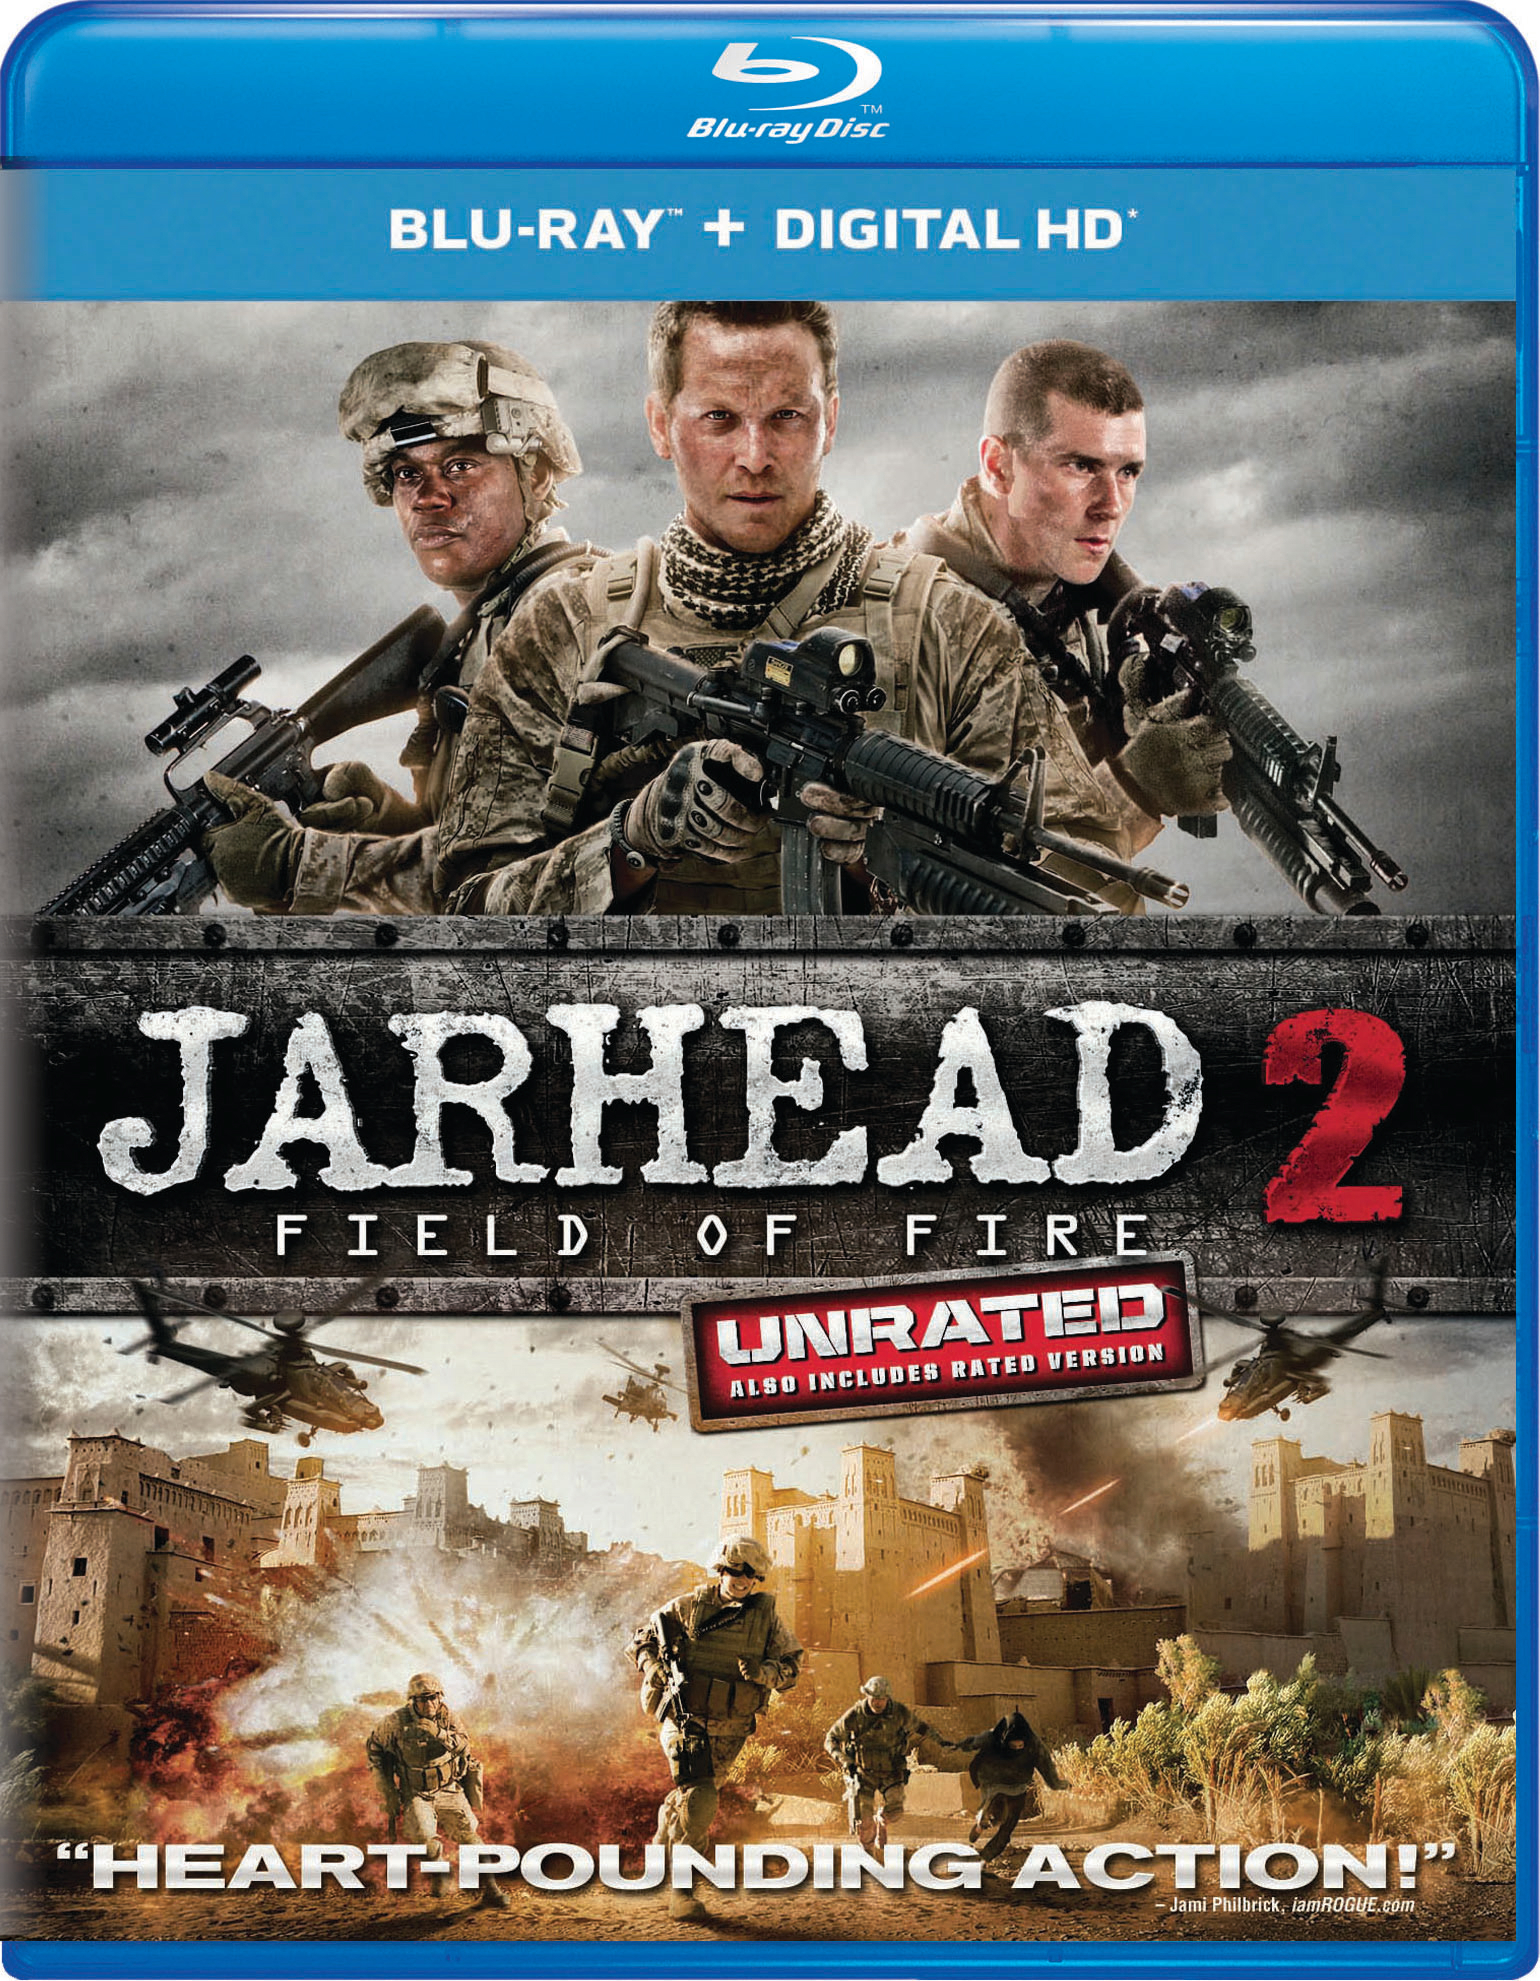 Jarhead 2 - Field Of Fire (Blu-ray + Digital HD) - Blu-ray [ 2014 ]  - War Movies On Blu-ray - Movies On GRUV